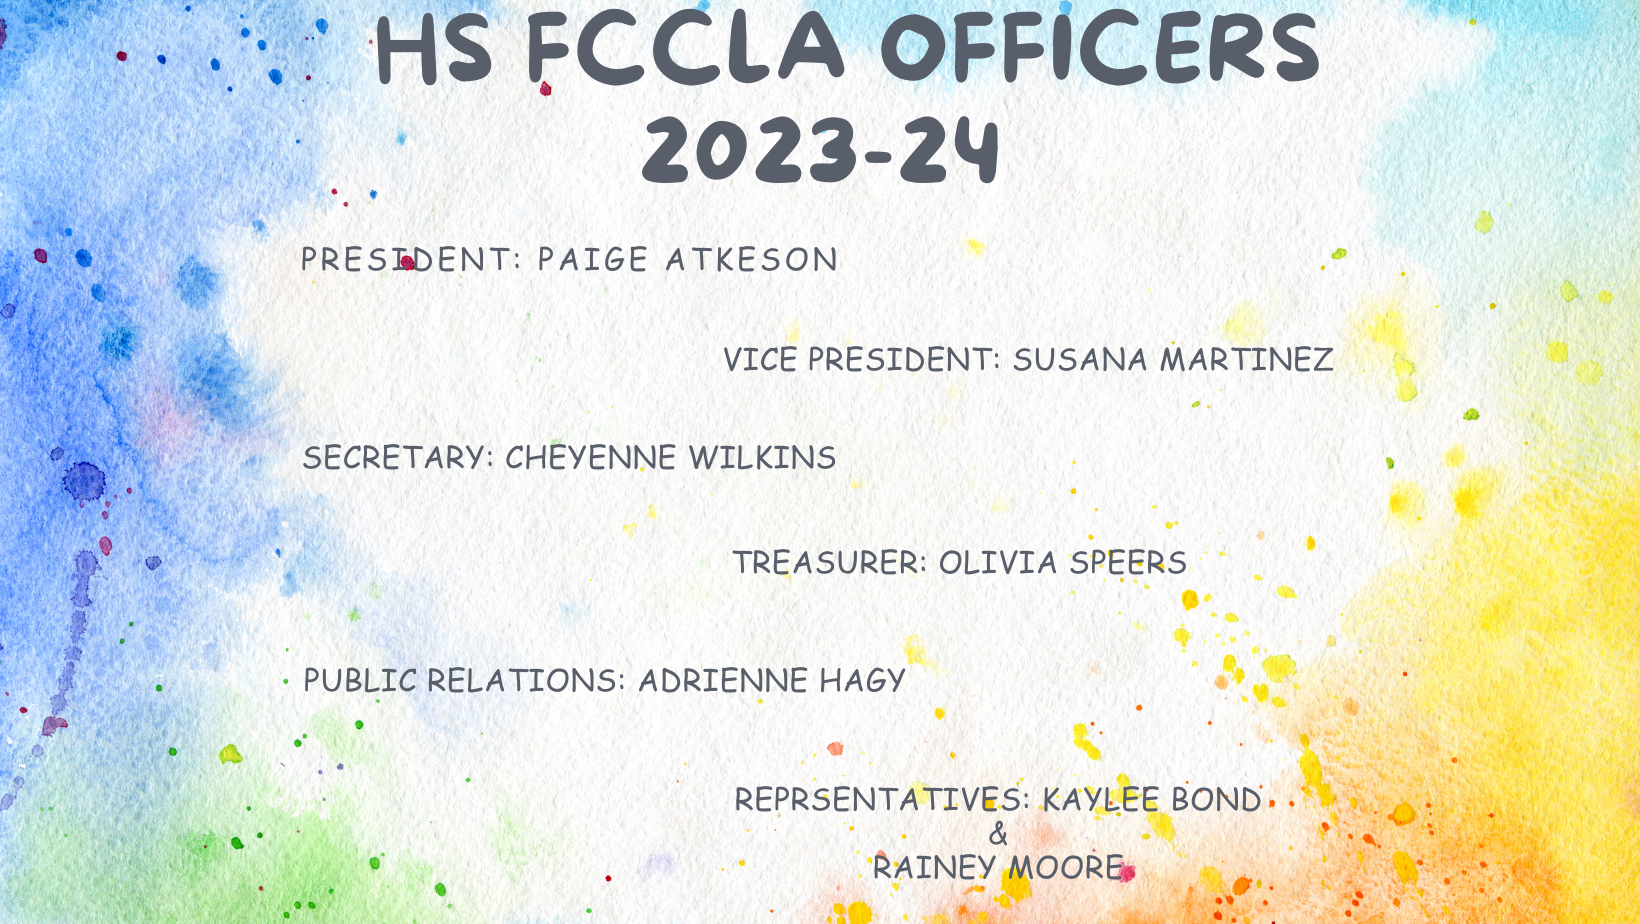 HS FCCLA officers